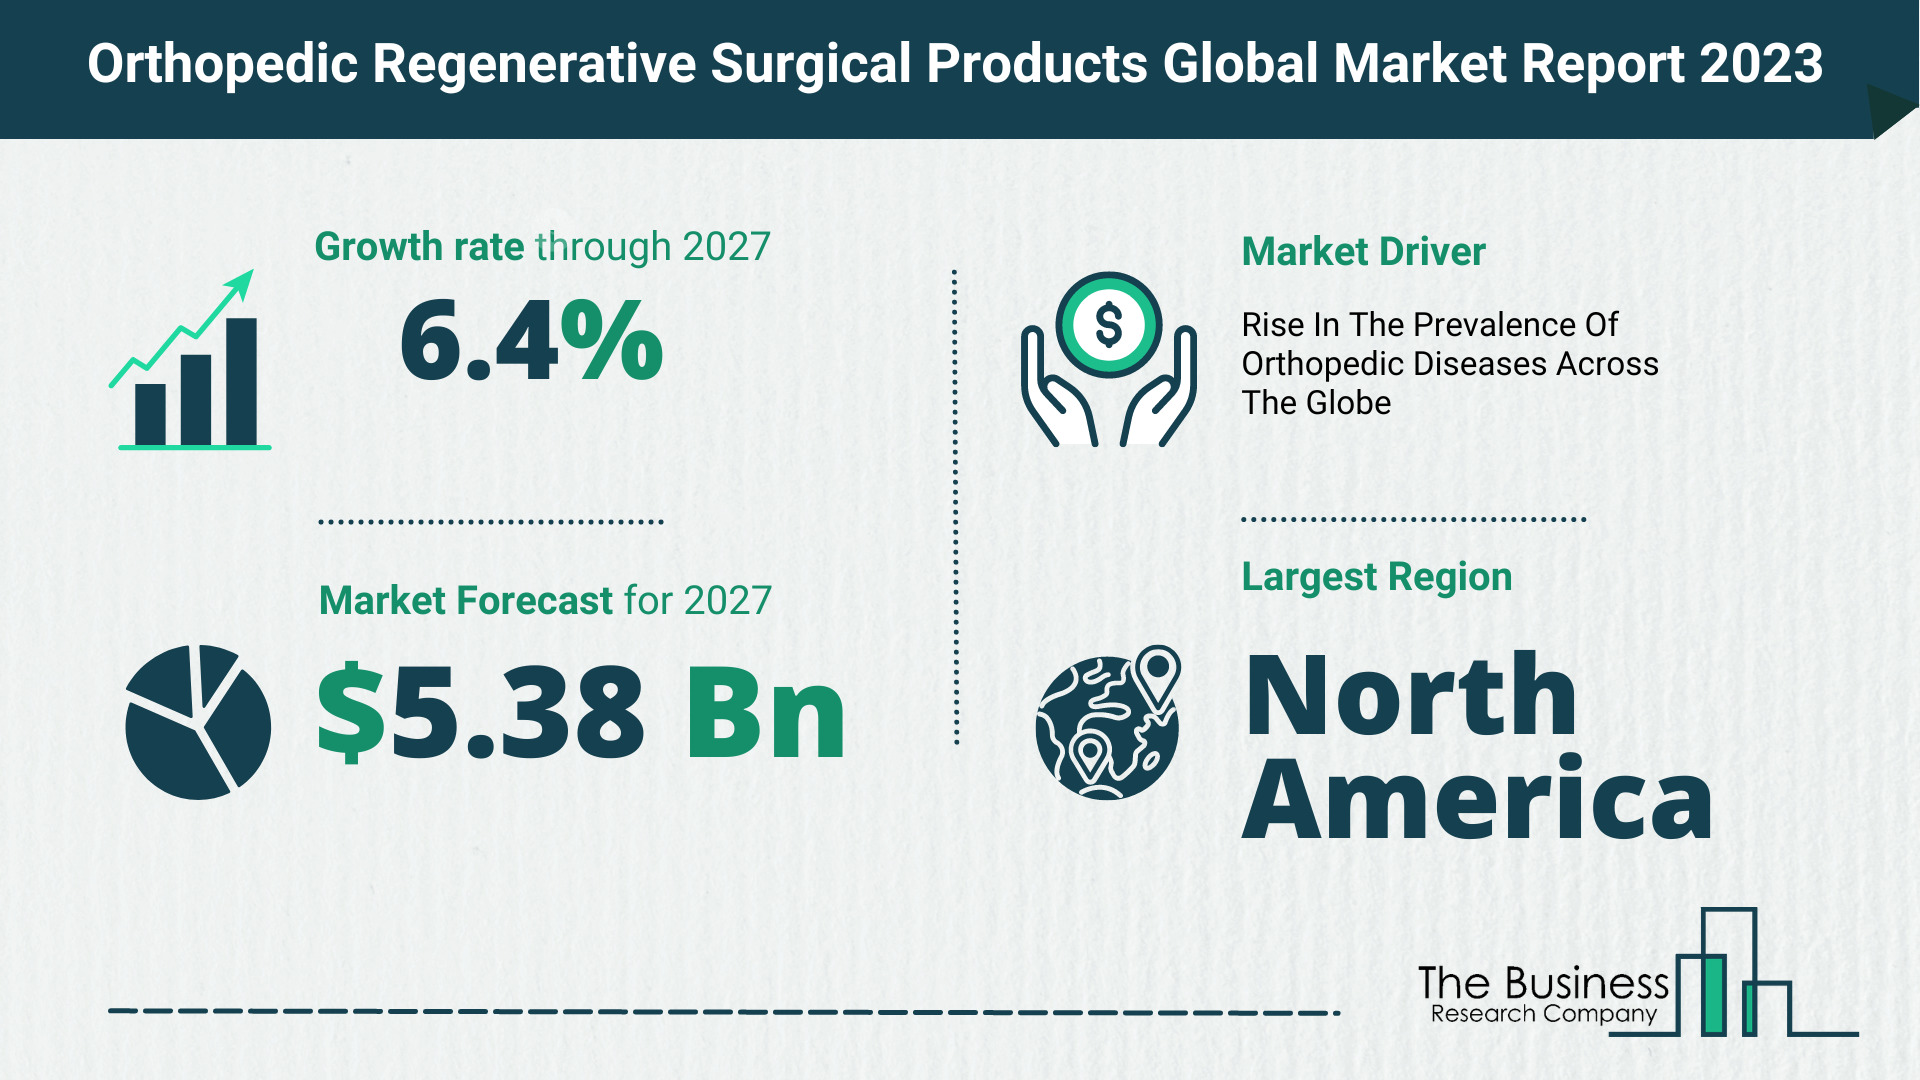 Global Orthopedic Regenerative Surgical Products Market